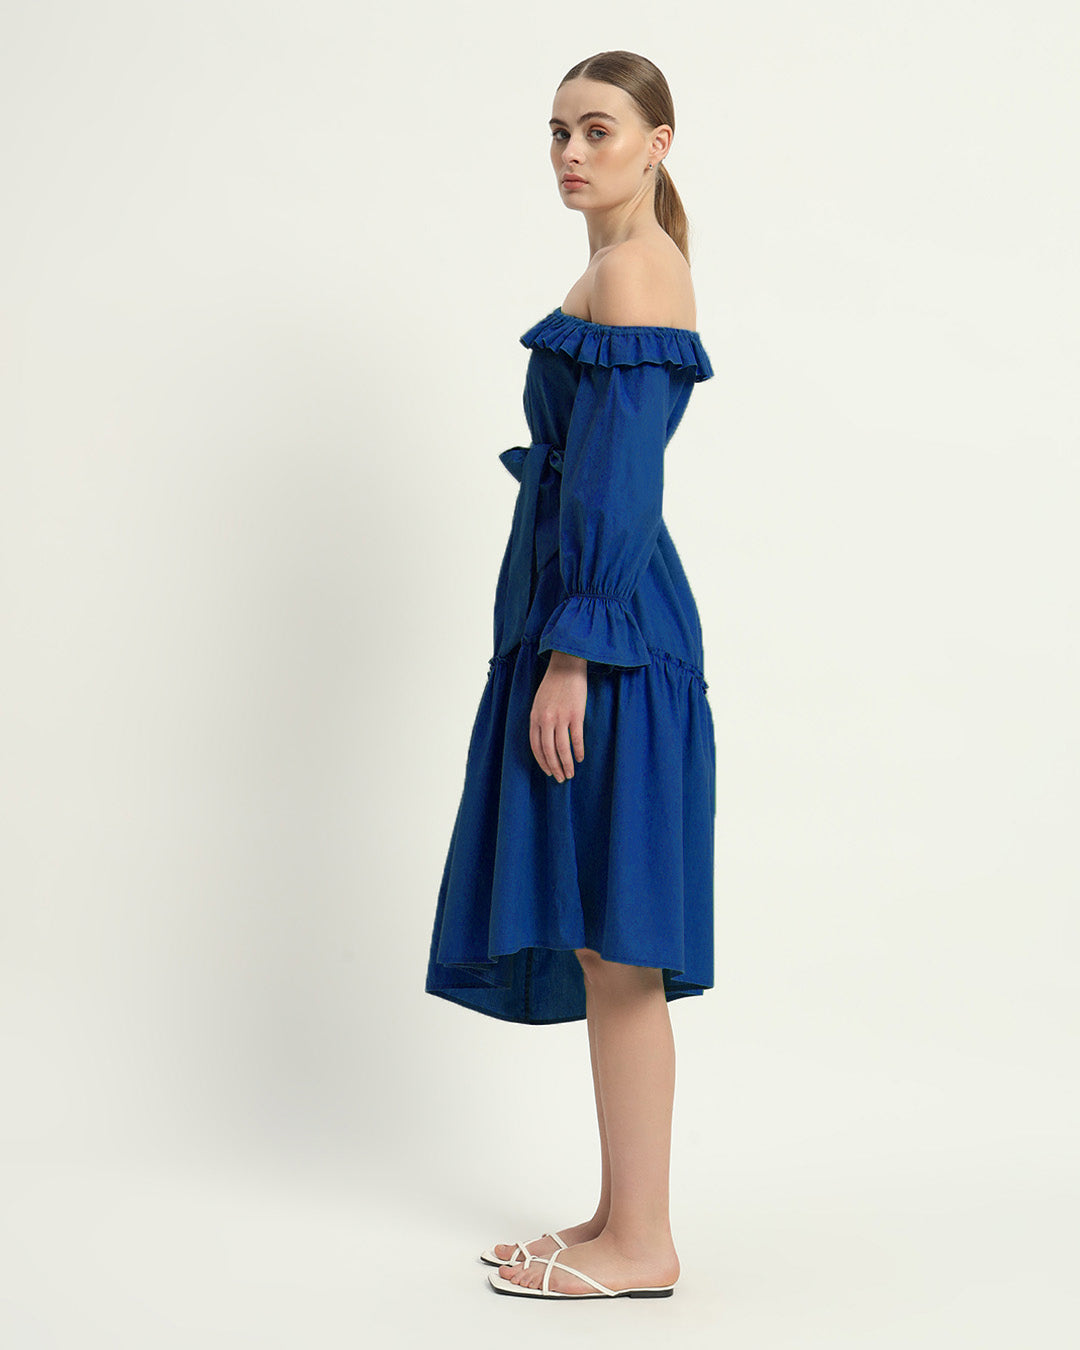 The Cobalt Stellata Cotton Dress